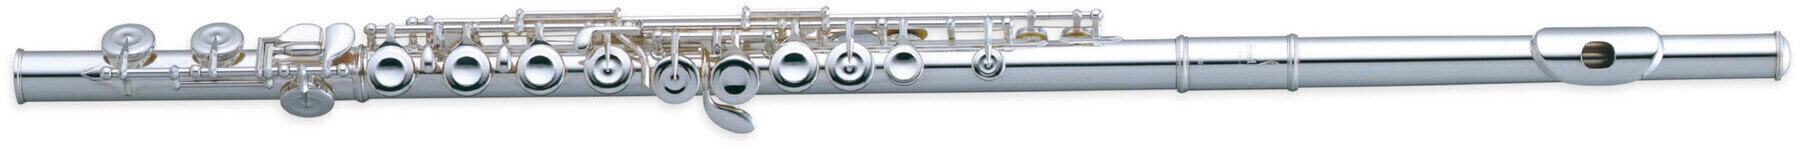 Concertdwarsfluit Pearl Flute F525RE Concertdwarsfluit